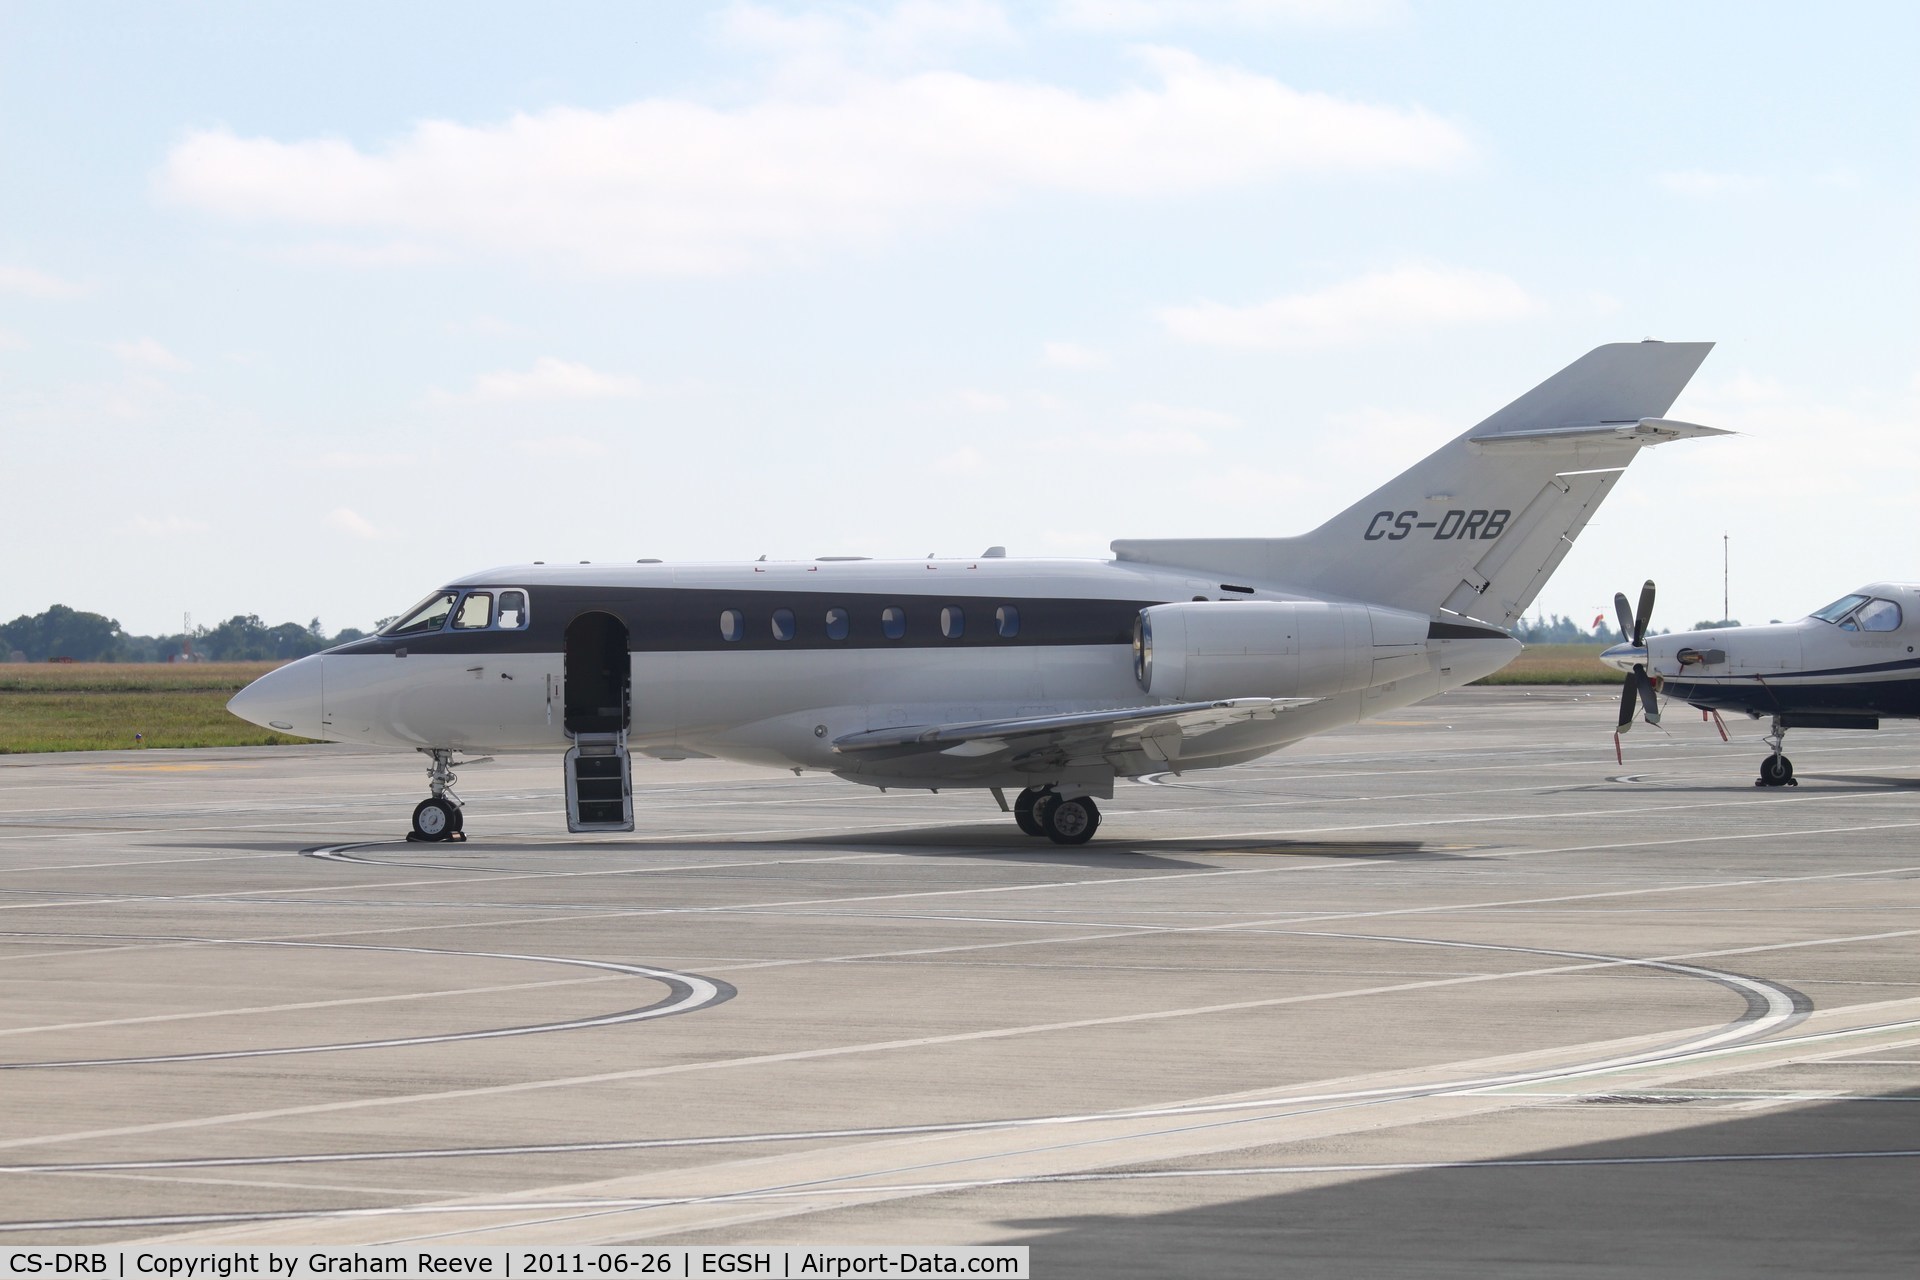 CS-DRB, 2004 Raytheon Hawker 800XP C/N 258690, Parked at Norwich.